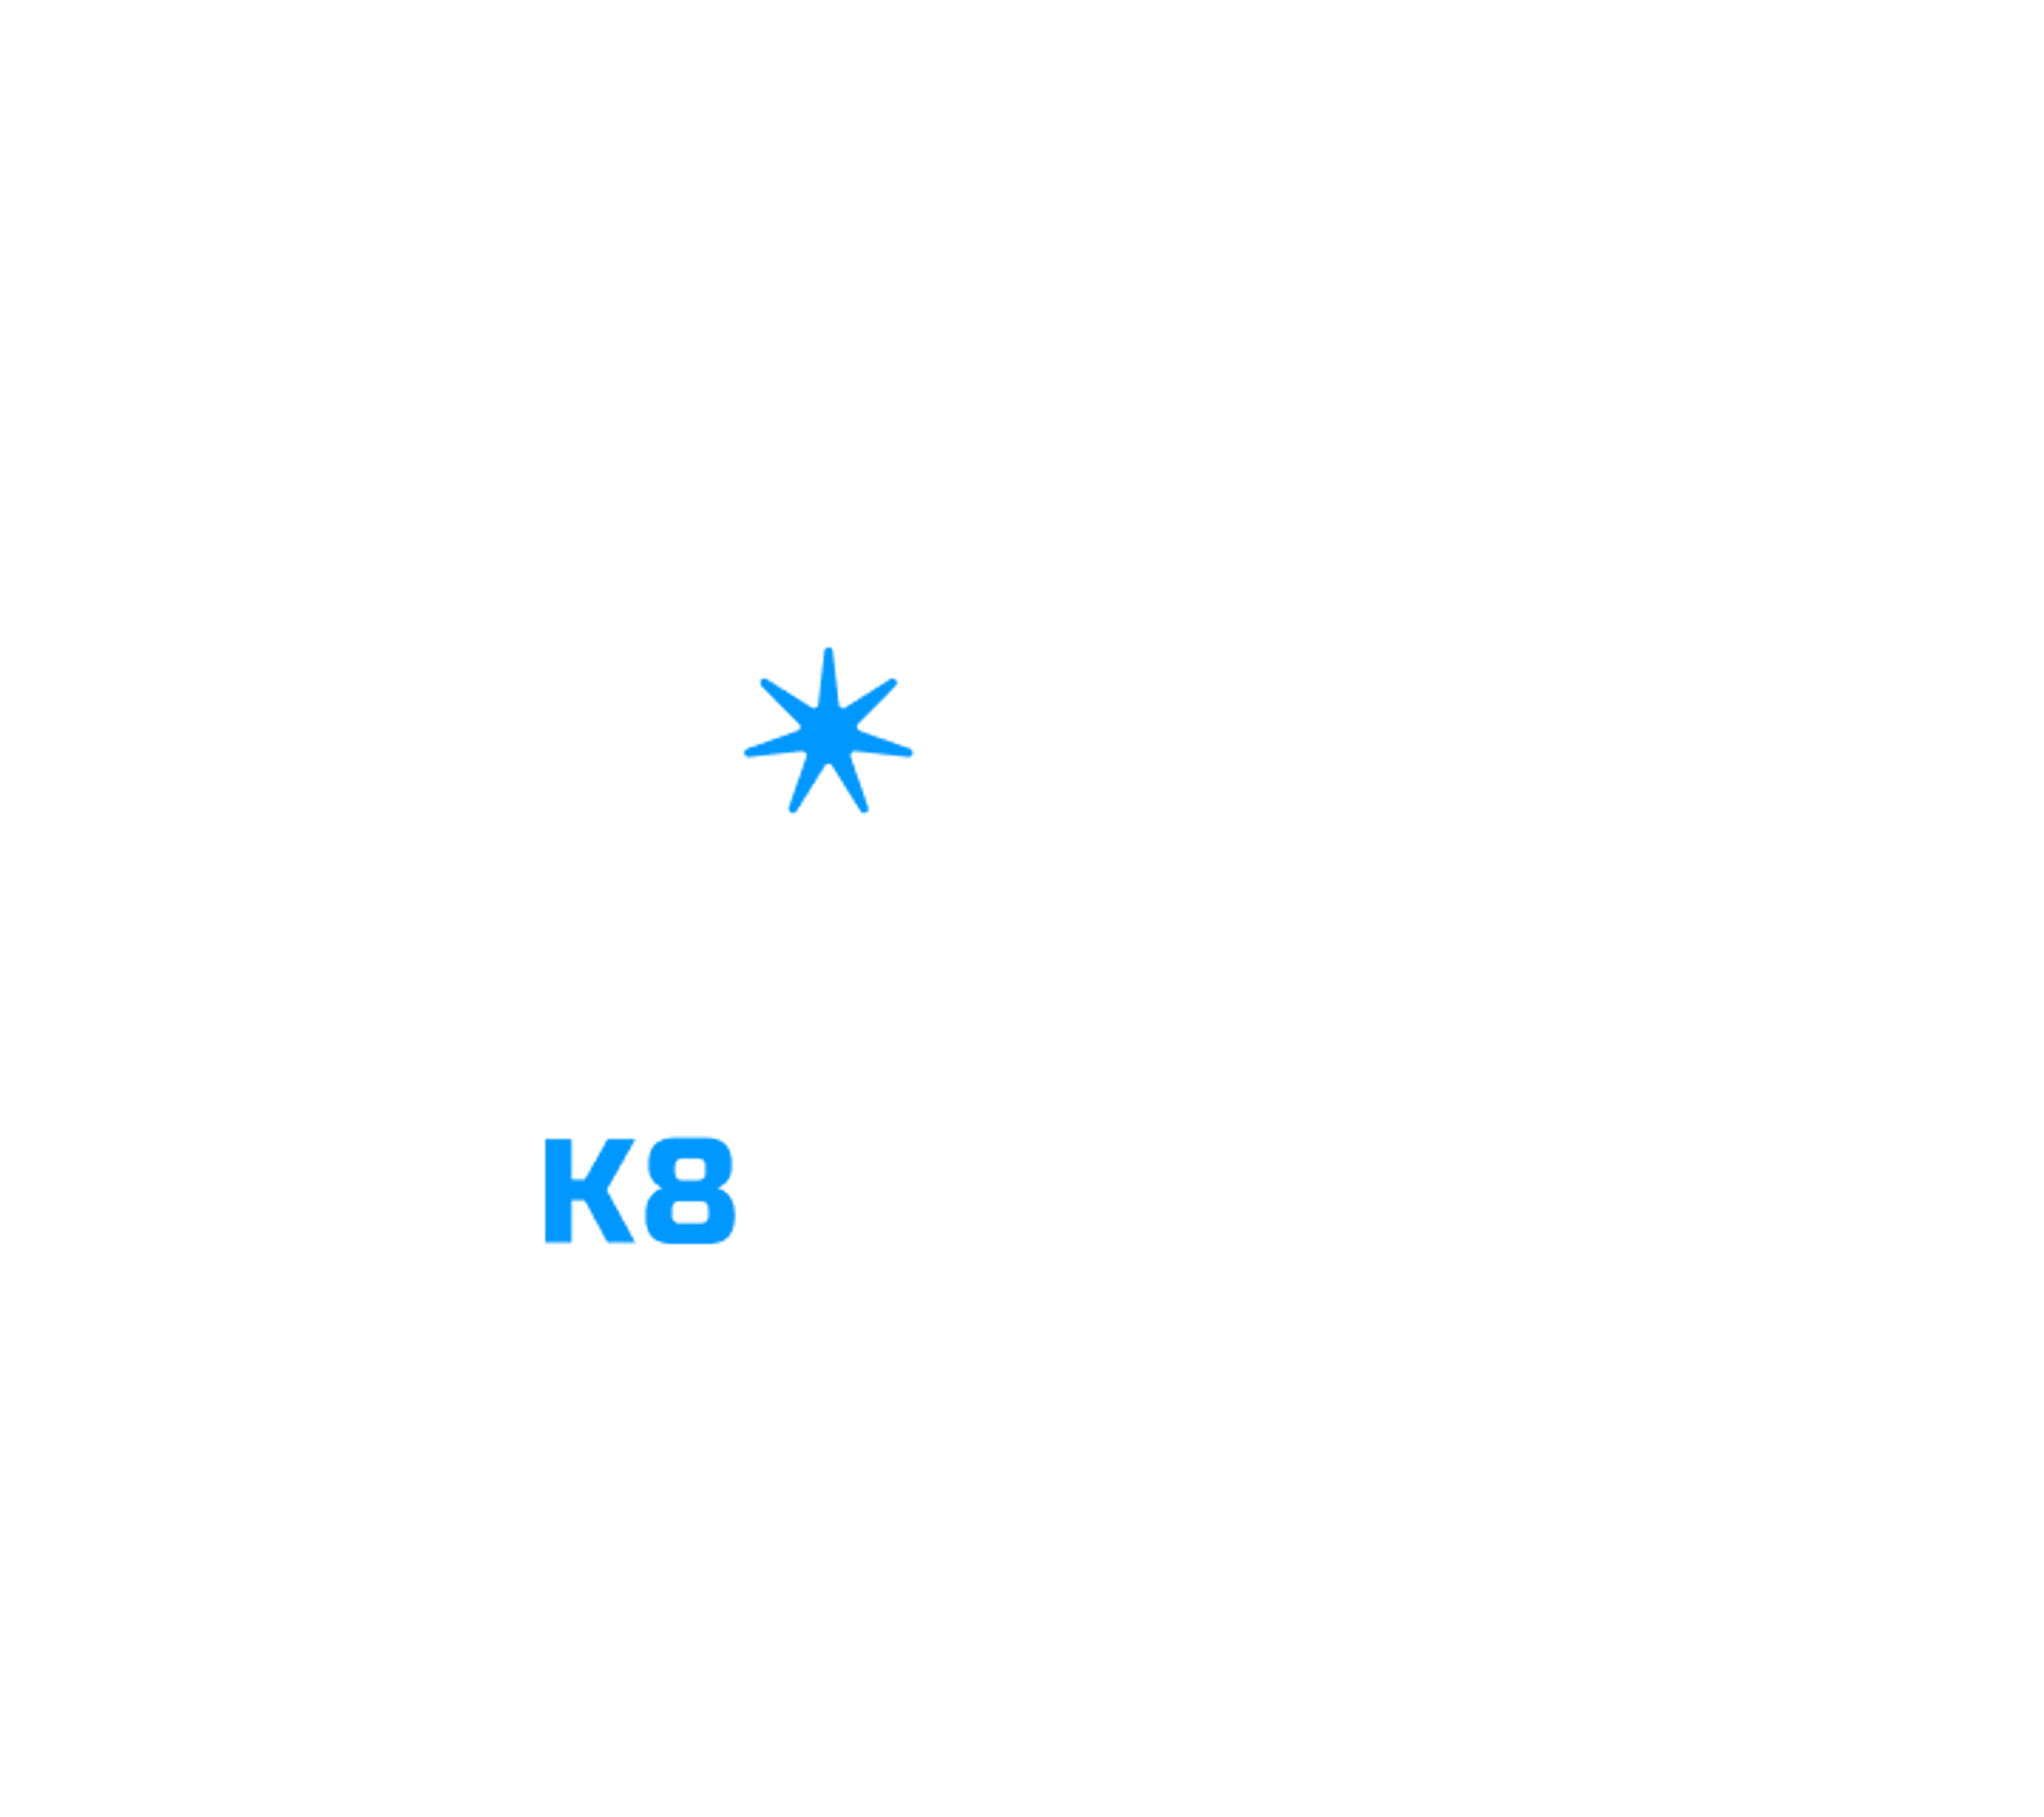 K8ssandra